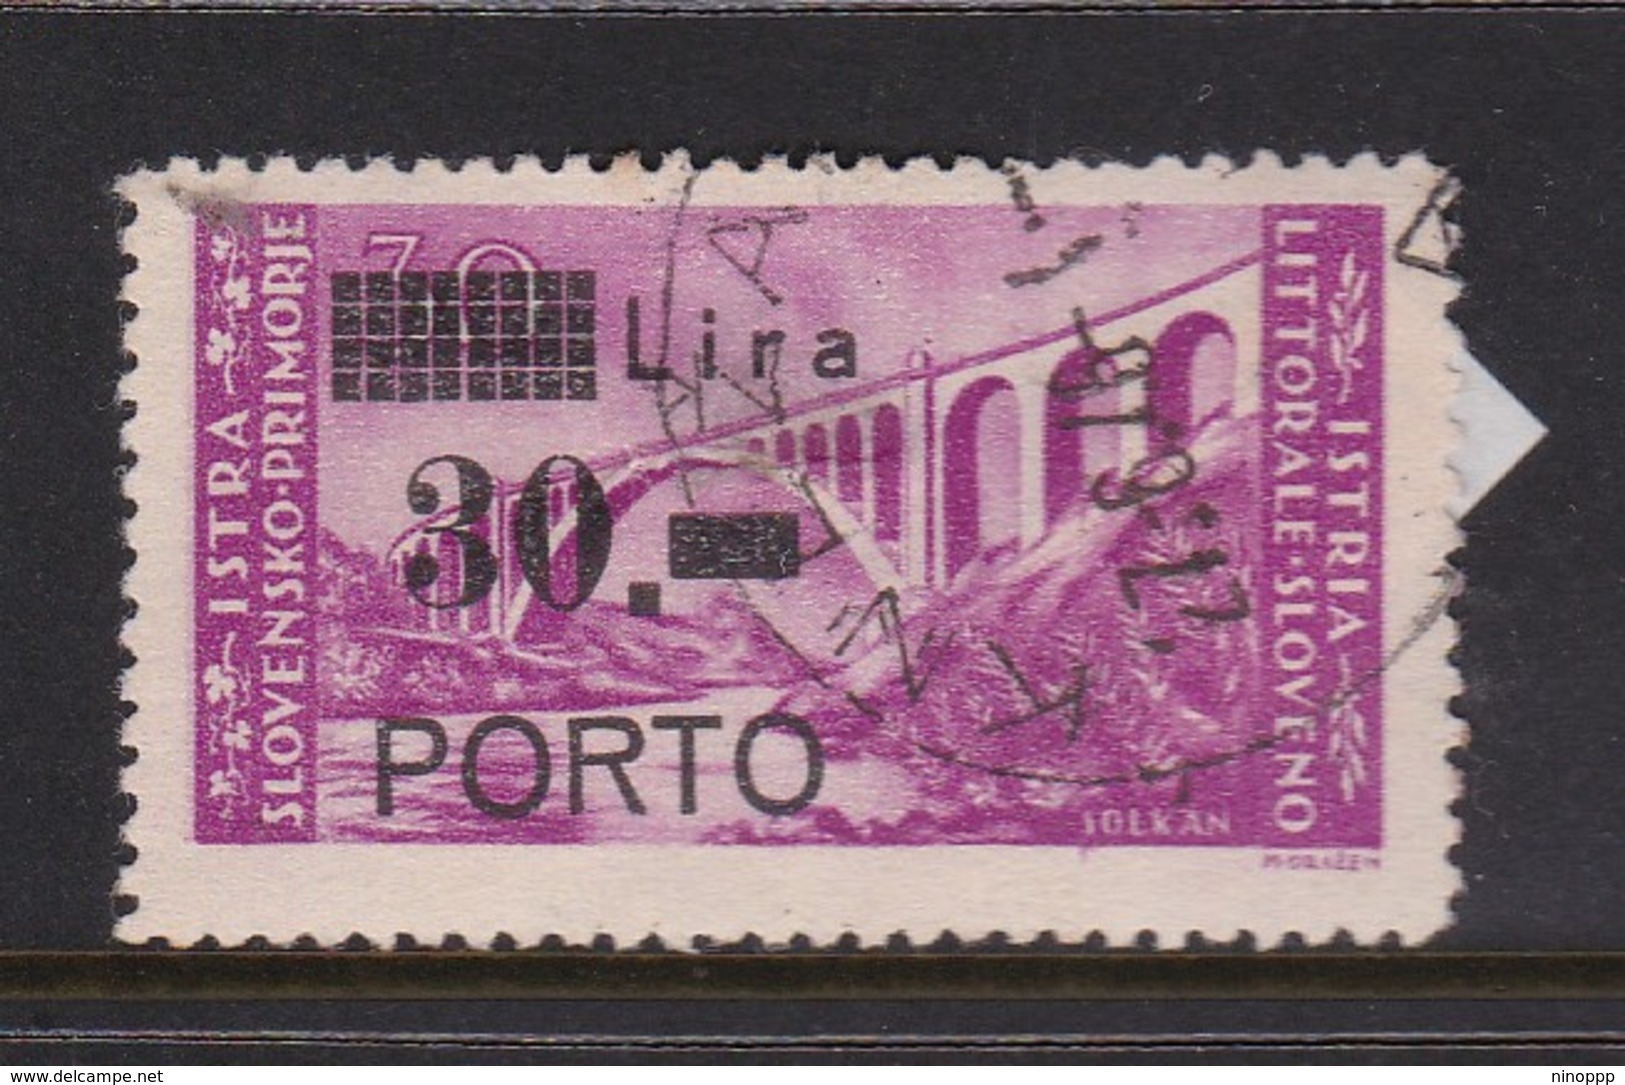 Istria Yugoslav Occupation Postage Due S13 1946 30 L On 30 L Mauve Used - Yugoslavian Occ.: Slovenian Shore